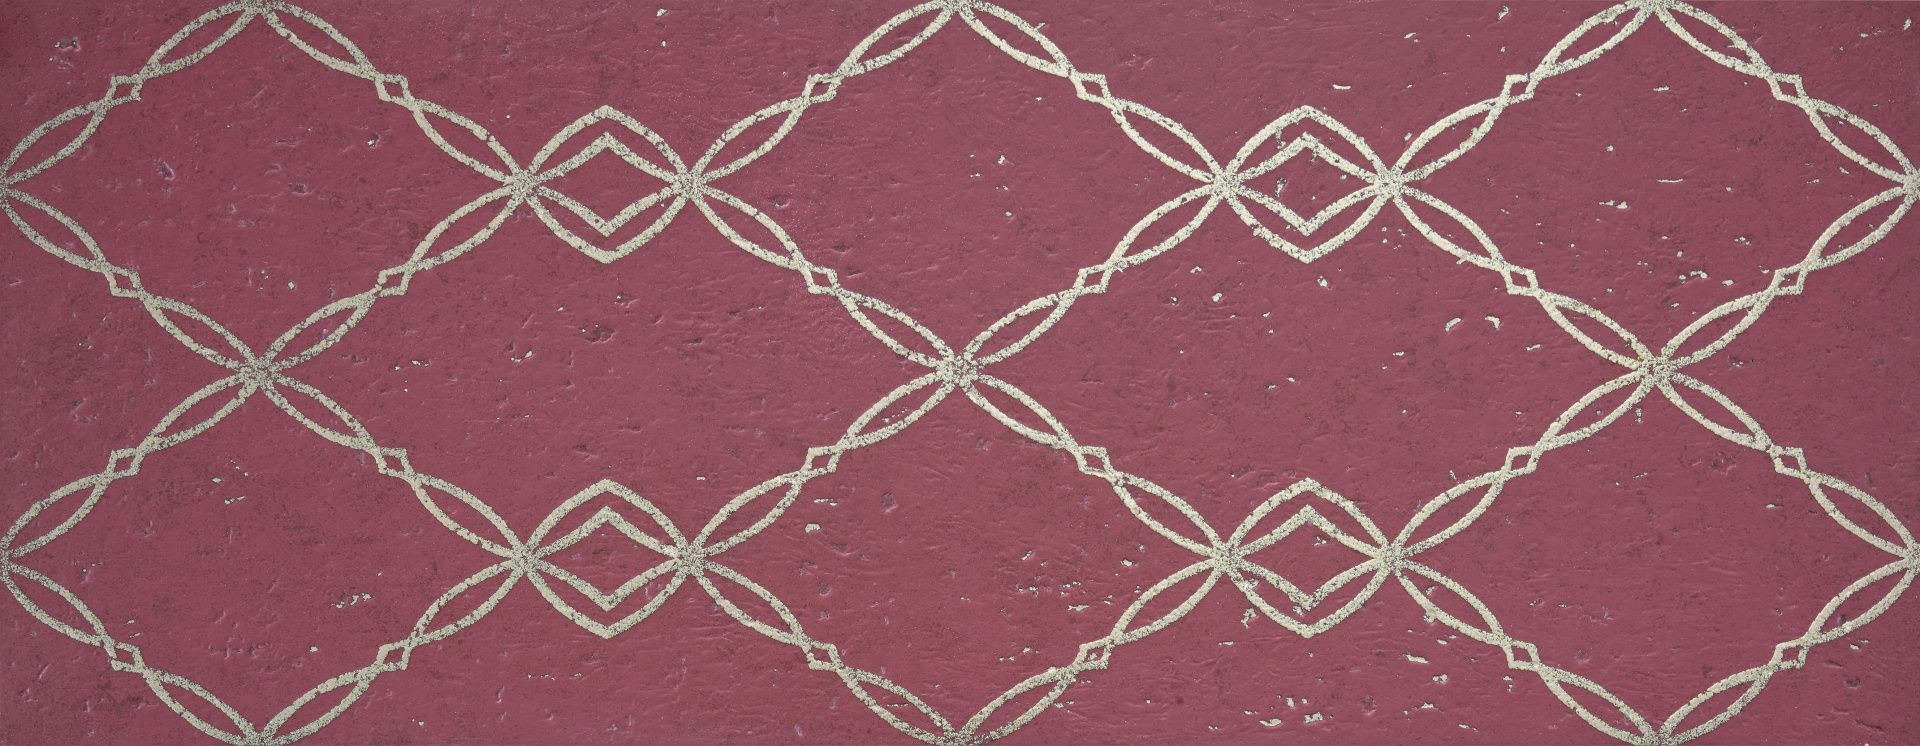 Керамическая плитка Goldstone Burgundy Chain для стен 35x90